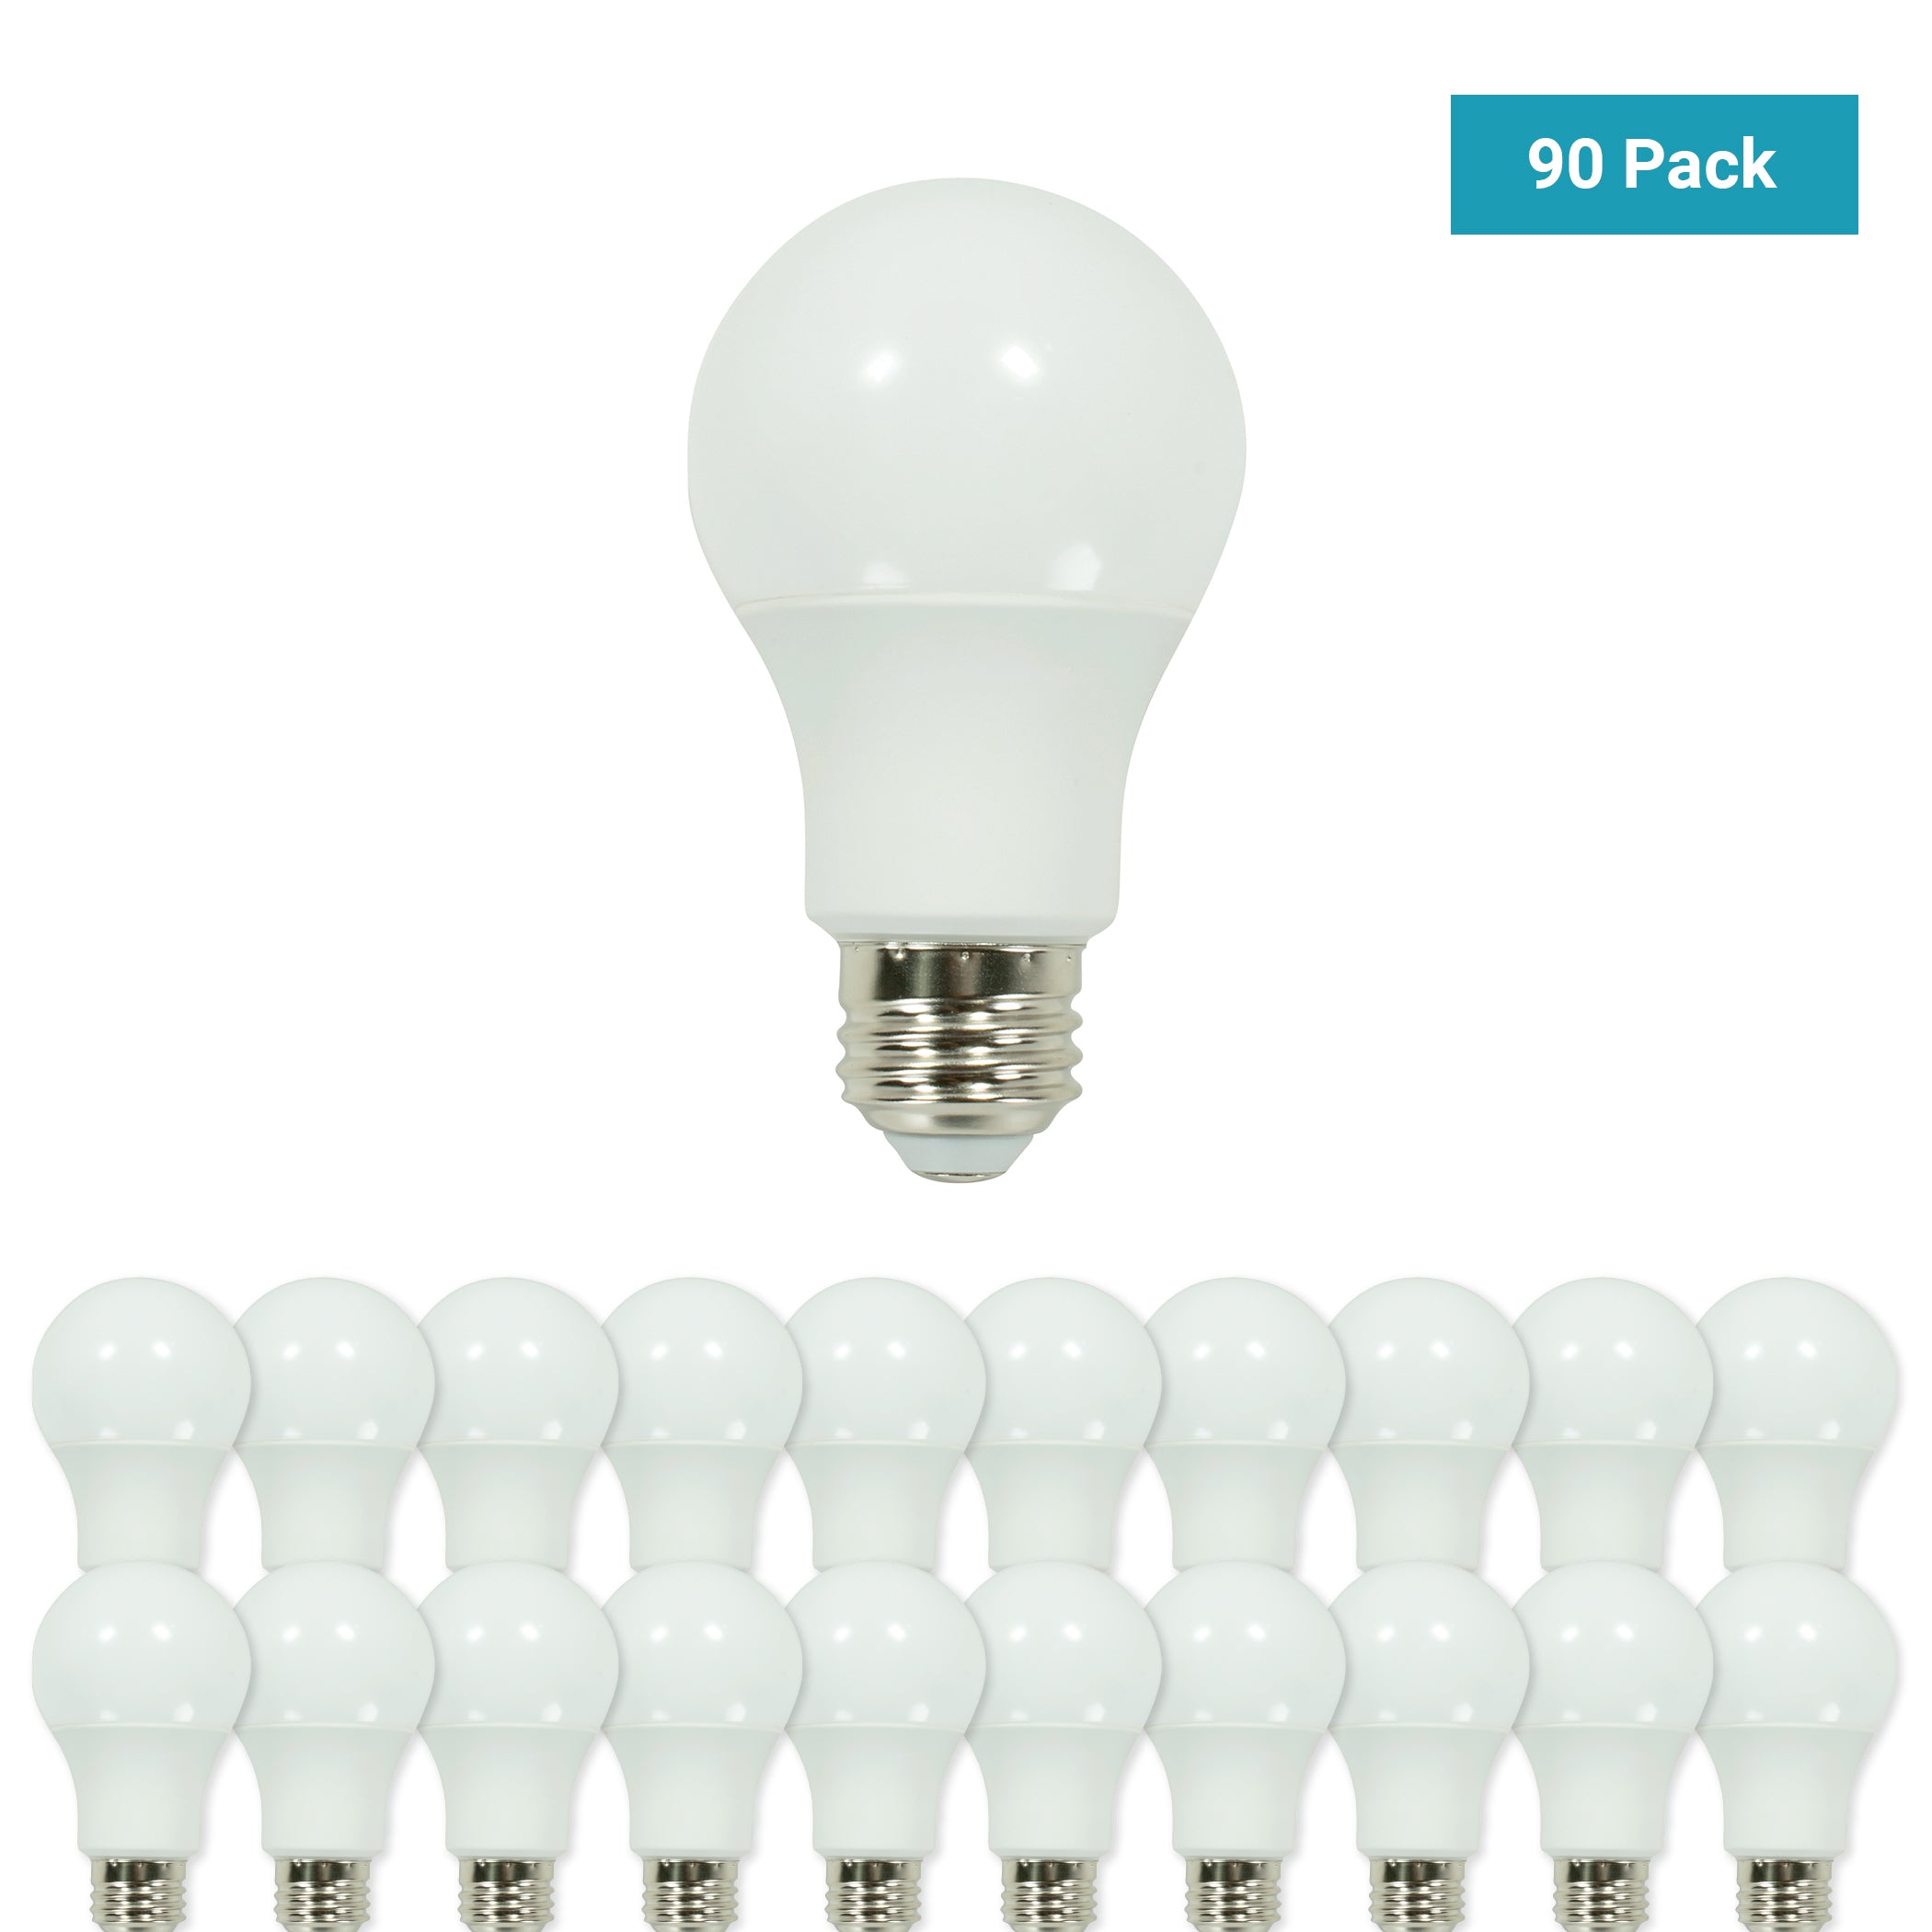 1500 Lumen LED A19 Bulb, 15-Watt, 100-Watt Equivalent E26, 10-Pack